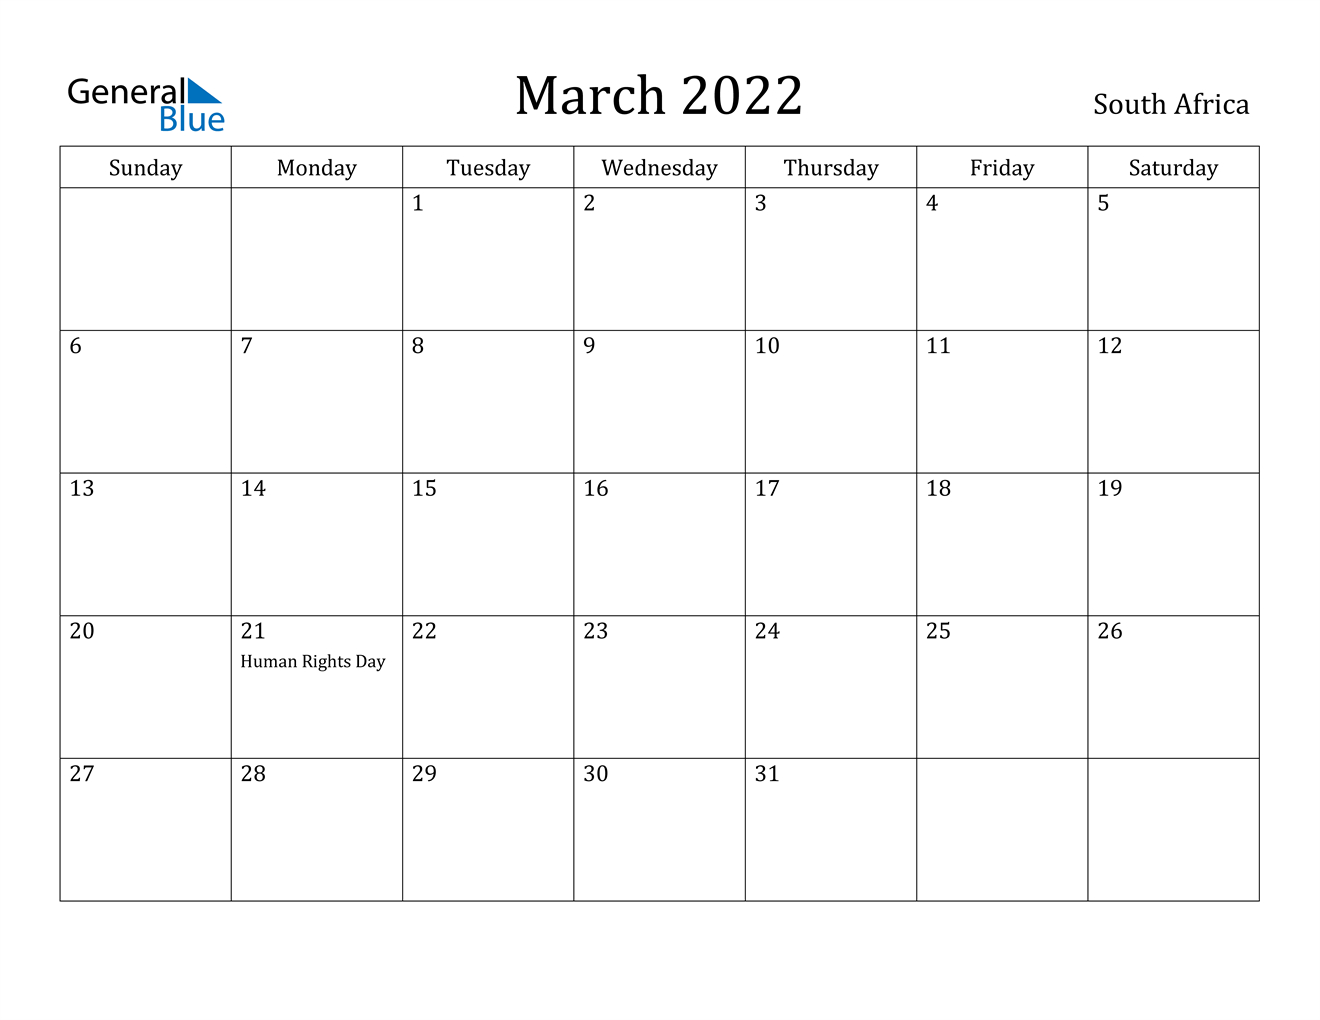 March 2022 Calendar South Africa